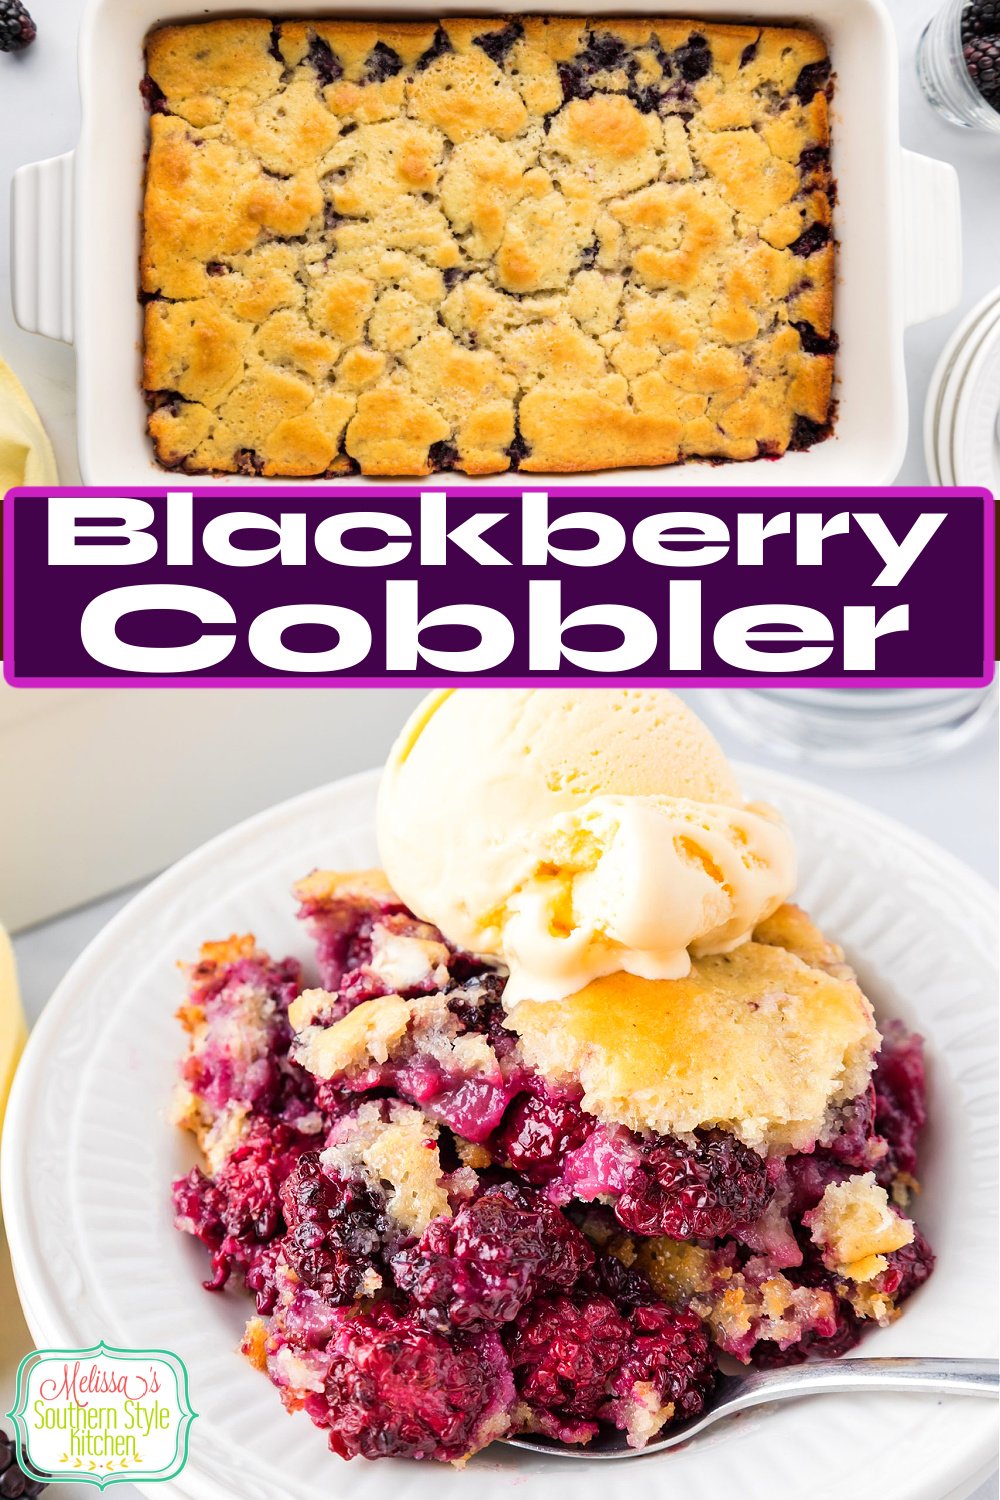 Blackberry Cobbler Recipe - melissassouthernstylekitchen.com